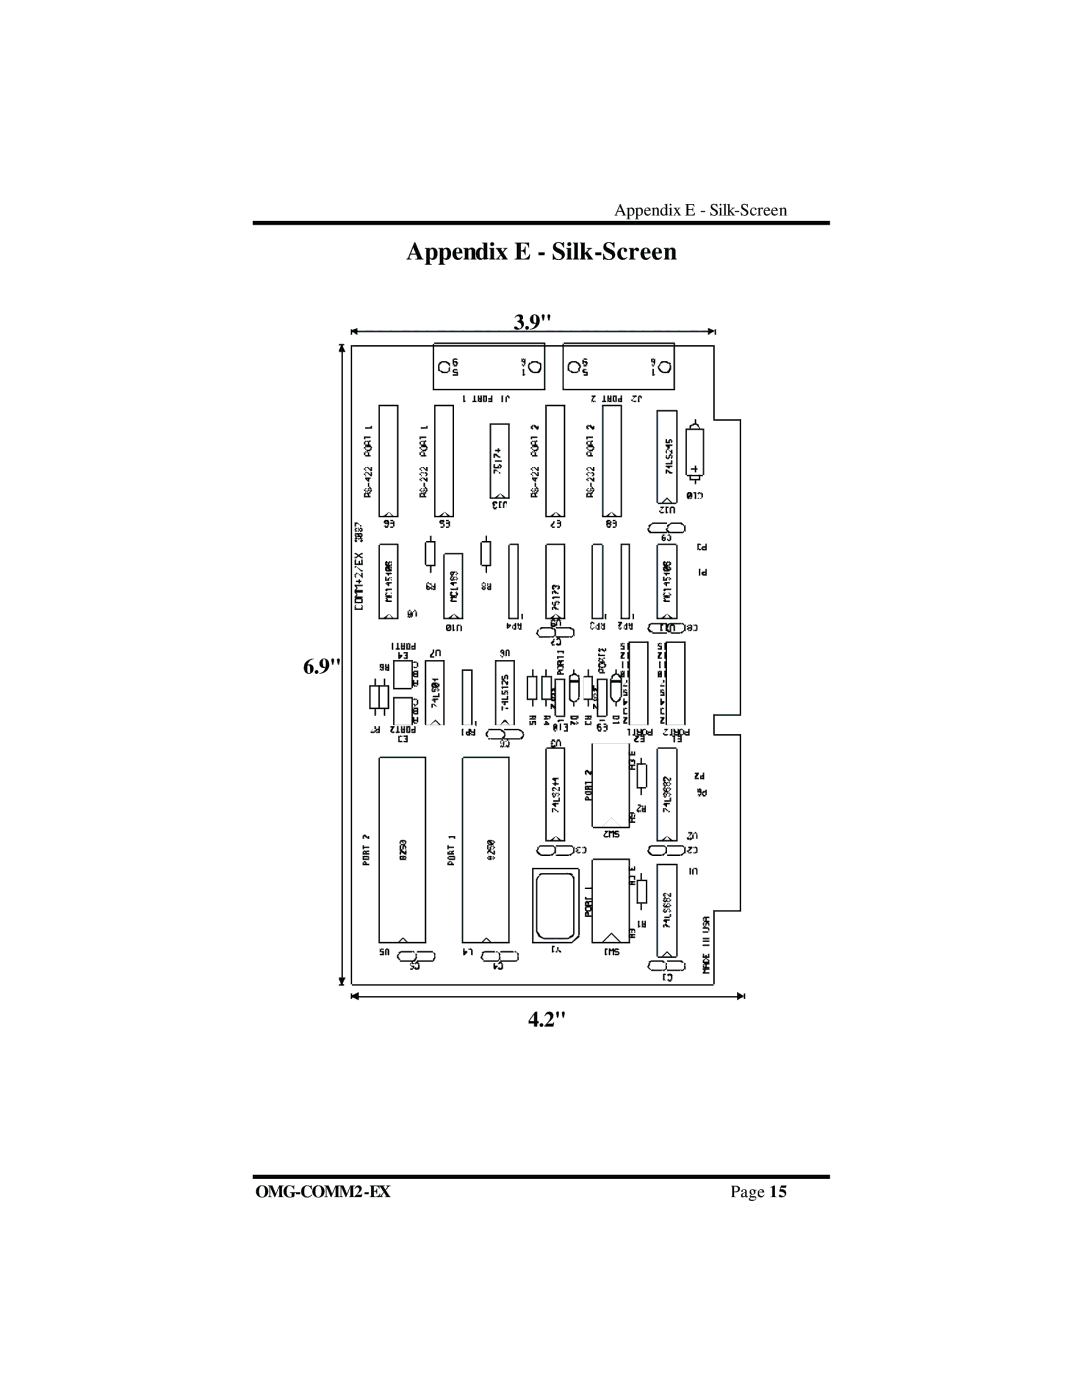 Omega Vehicle Security OMG-COMM2-EX manual Appendix E Silk-Screen 